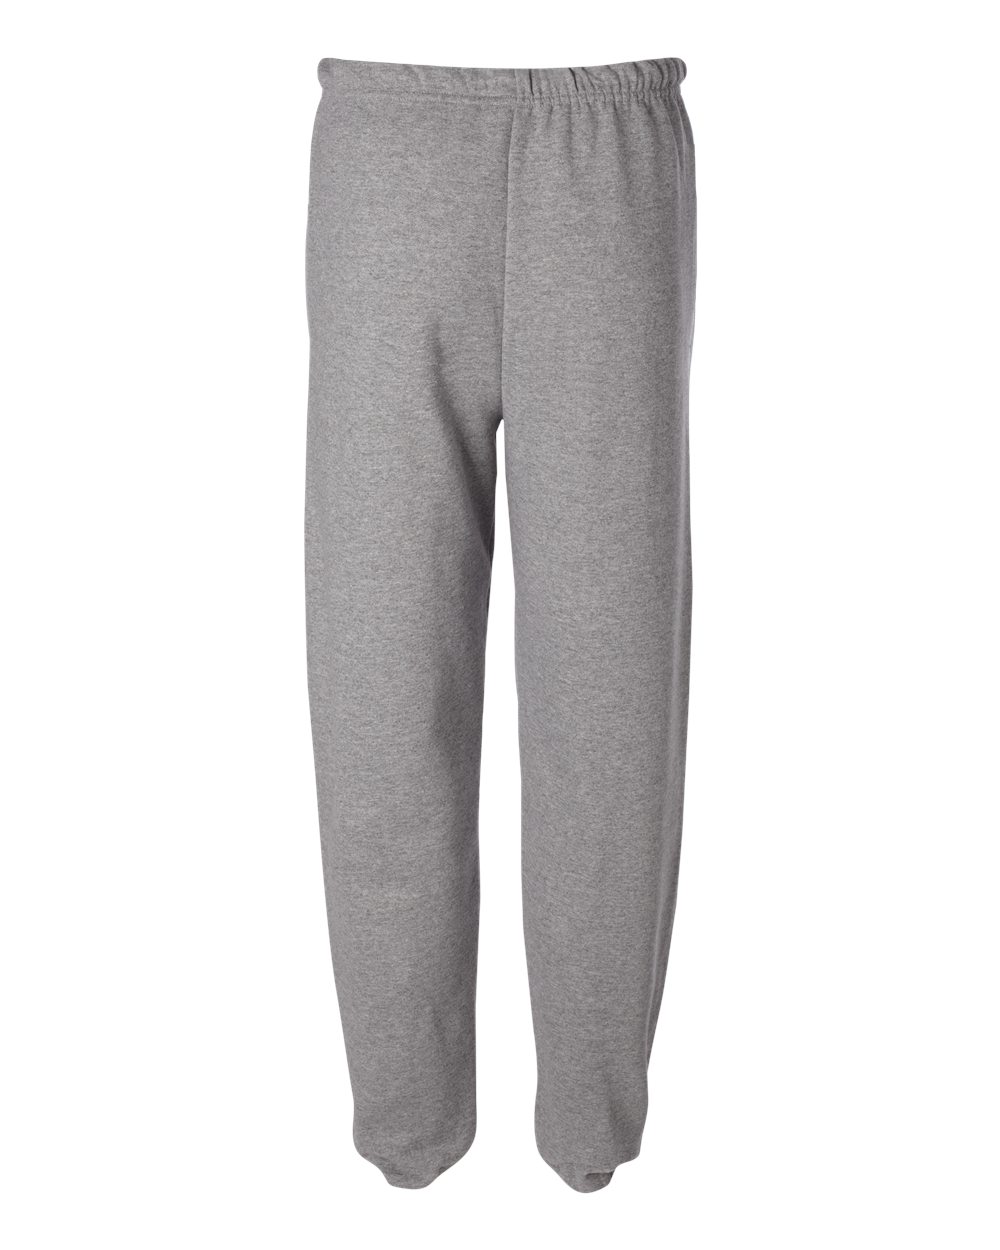 JERZEES Mens NuBlend Sweatpants Joggers Pants Solid 973MR up to 3XL | eBay